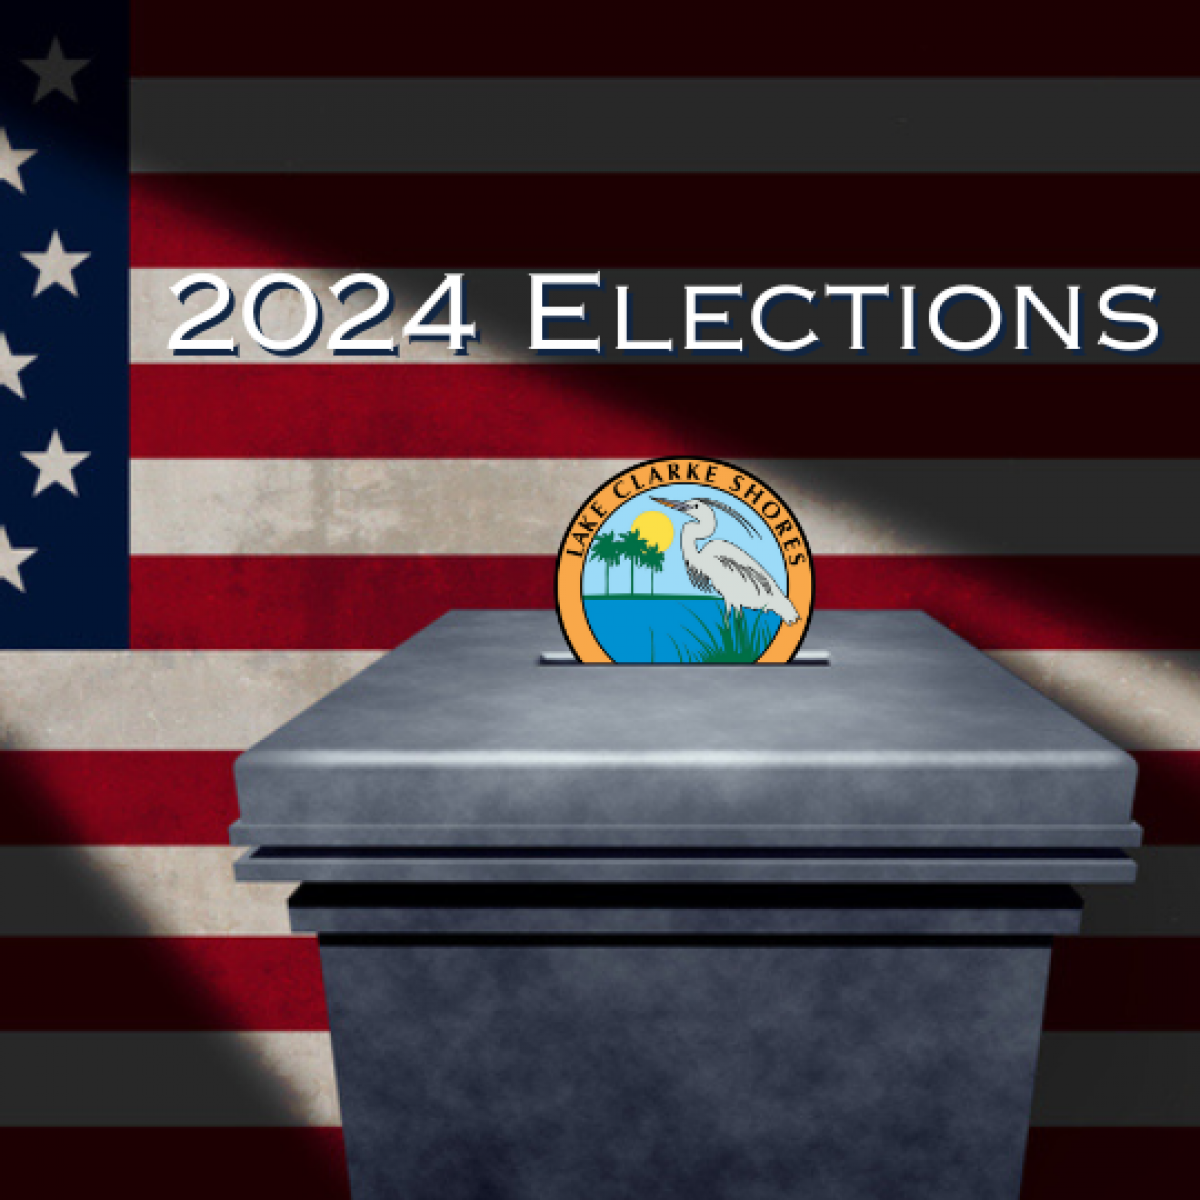 Lake clarke Shores election ballot box graphic